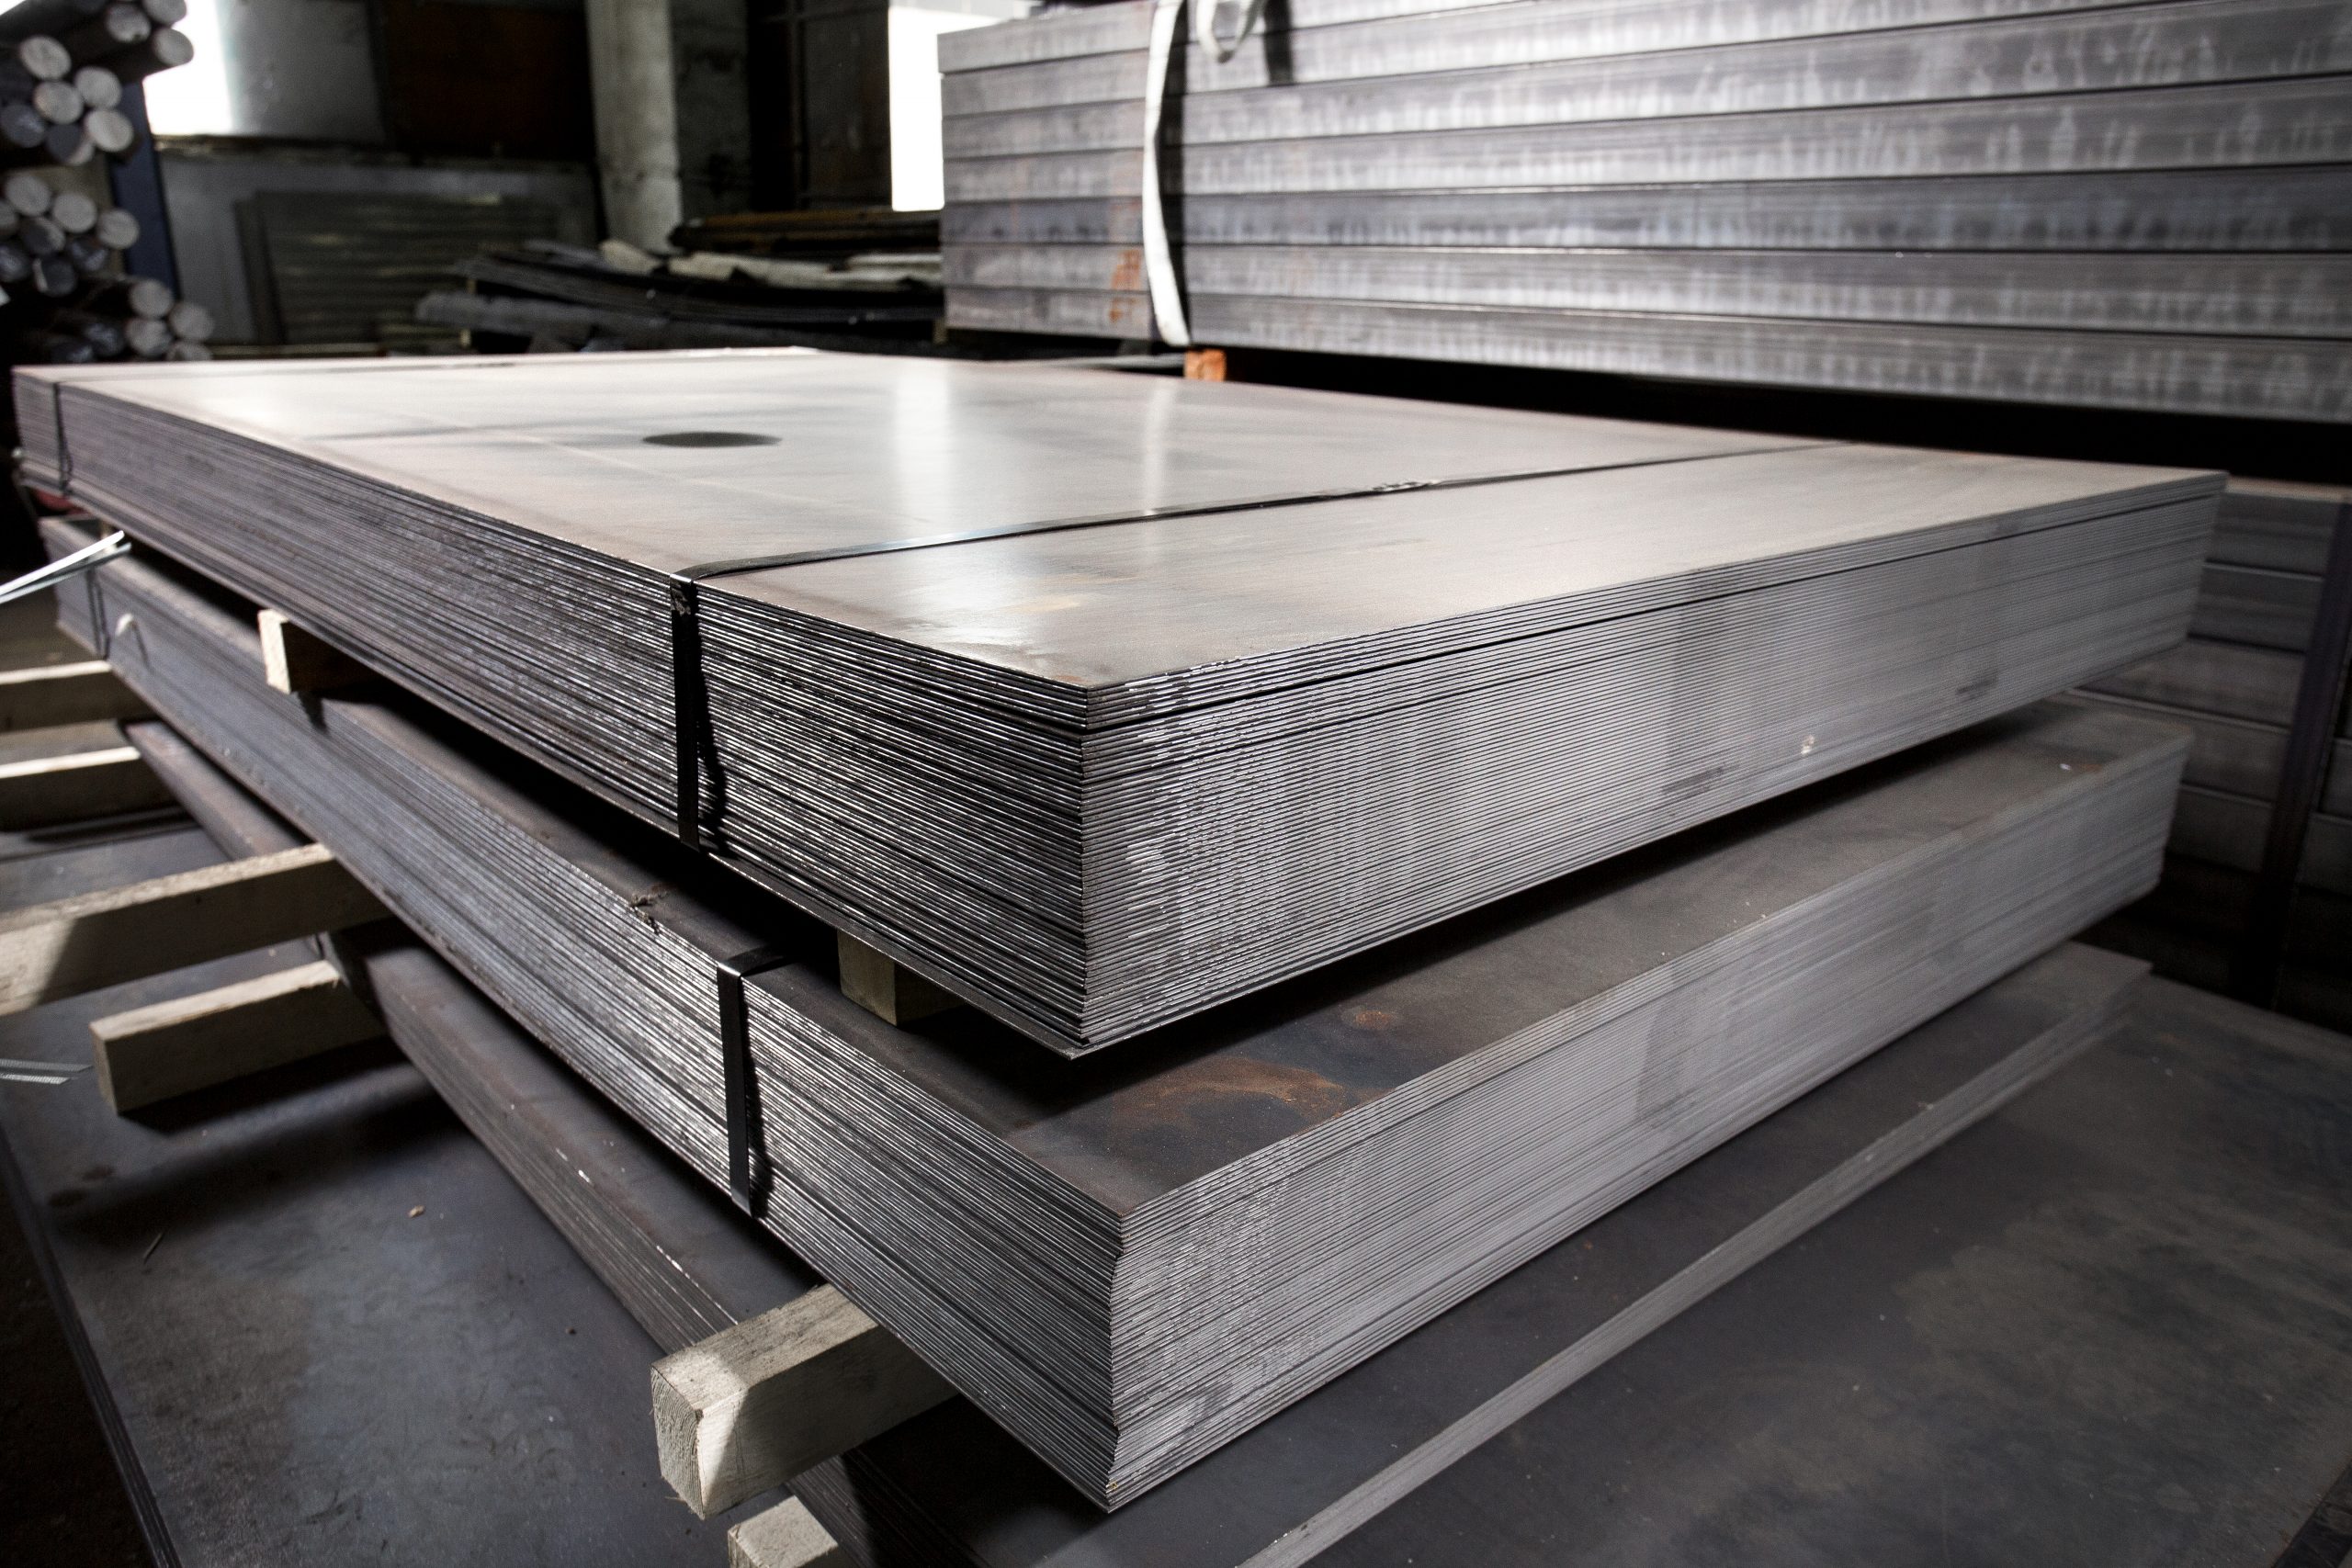 Steel sheet and galvanised sheet